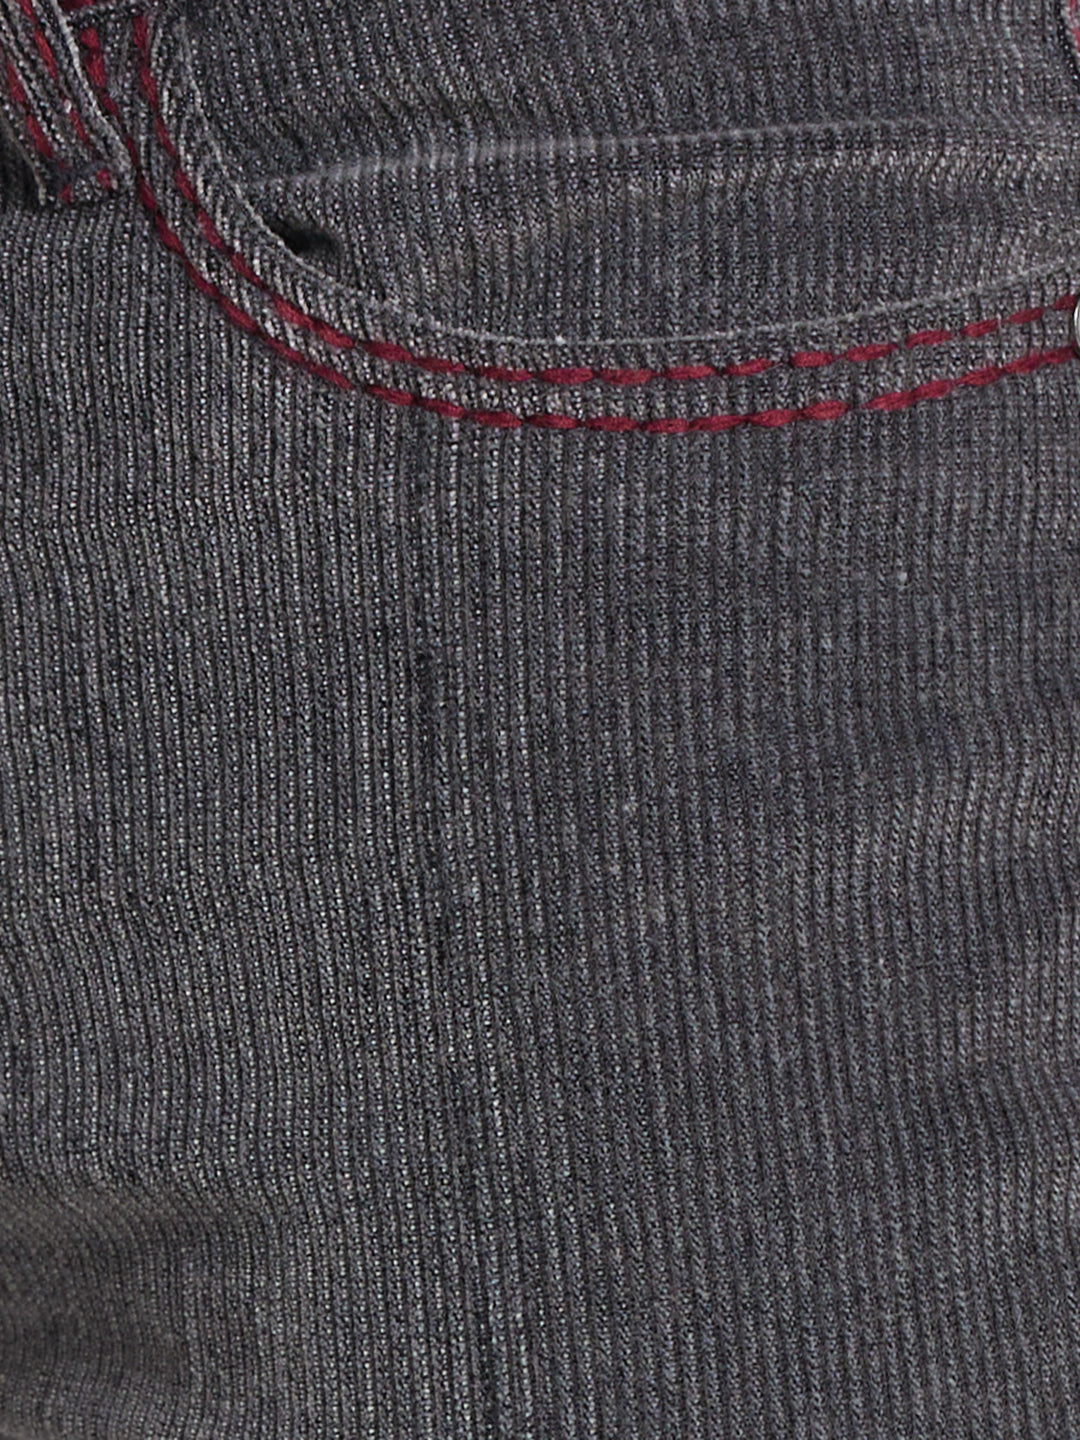 Dark Grey Bootcut Corduroy With Maroon Saddle Stitch And Bottom Zipper